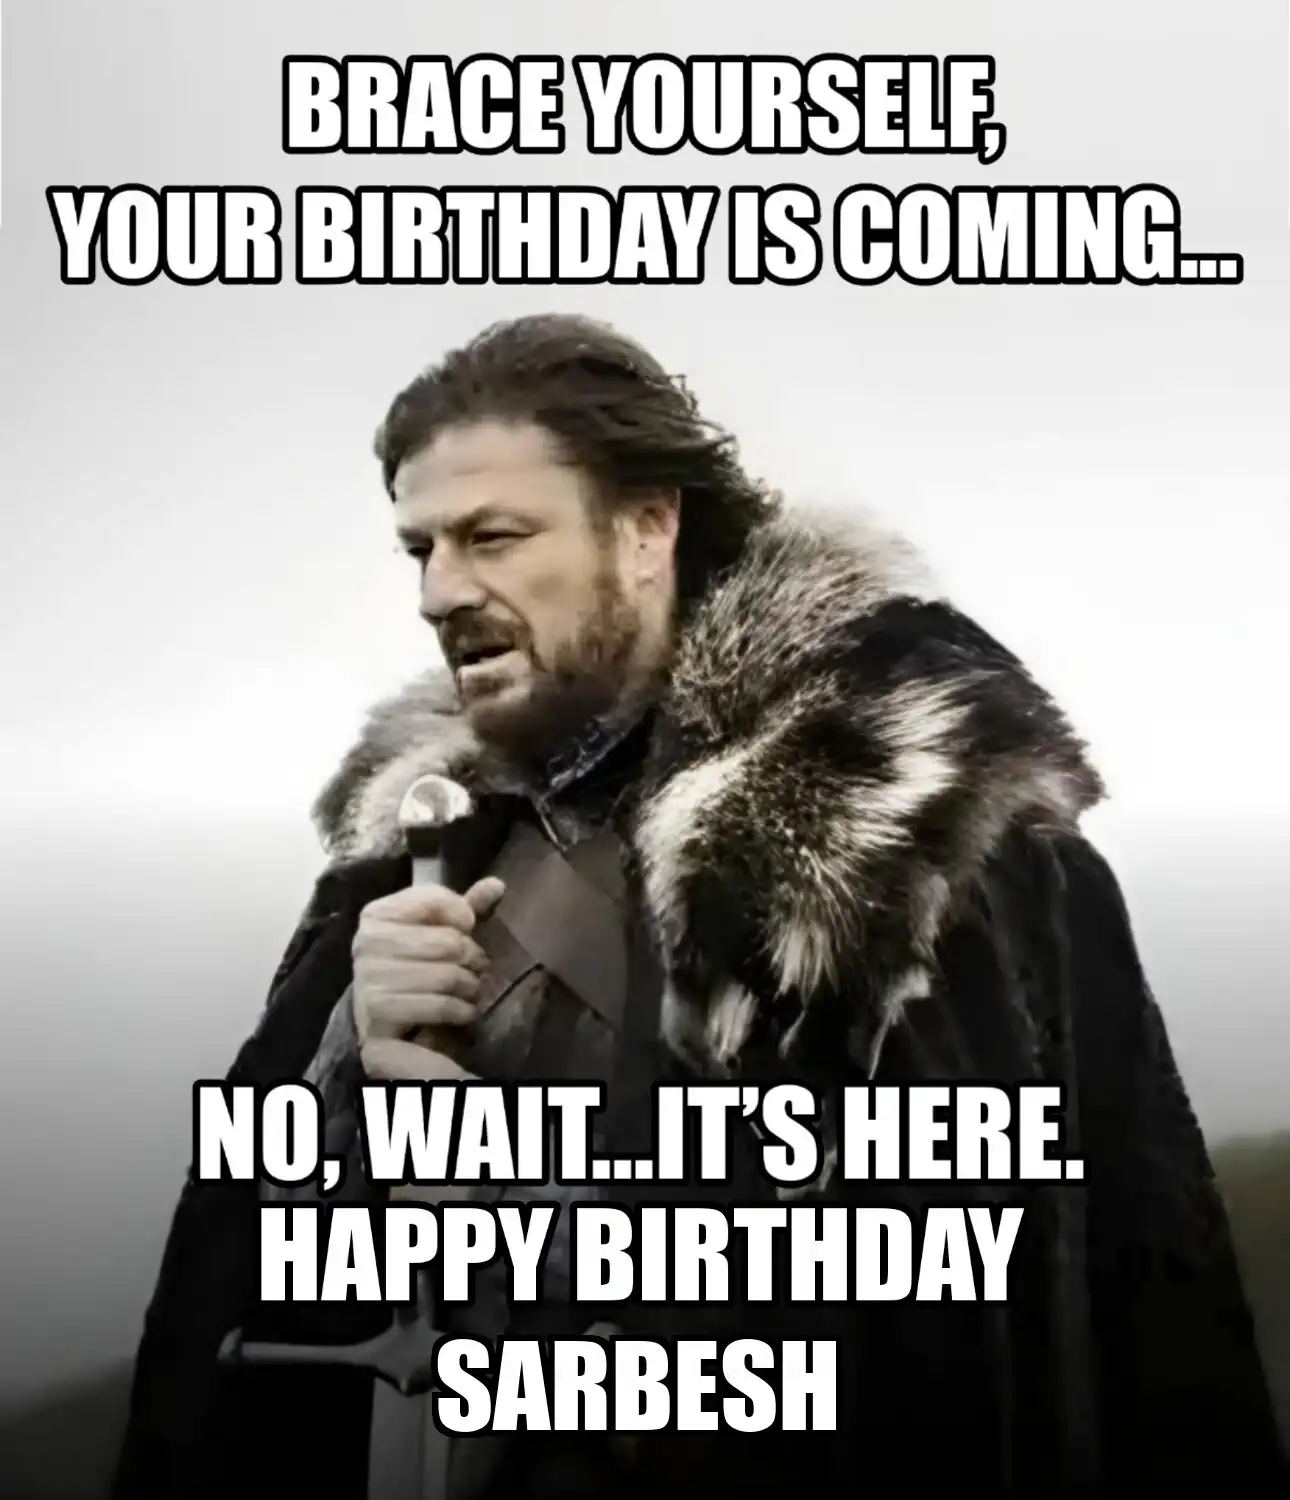 Happy Birthday Sarbesh Brace Yourself Your Birthday Is Coming Meme